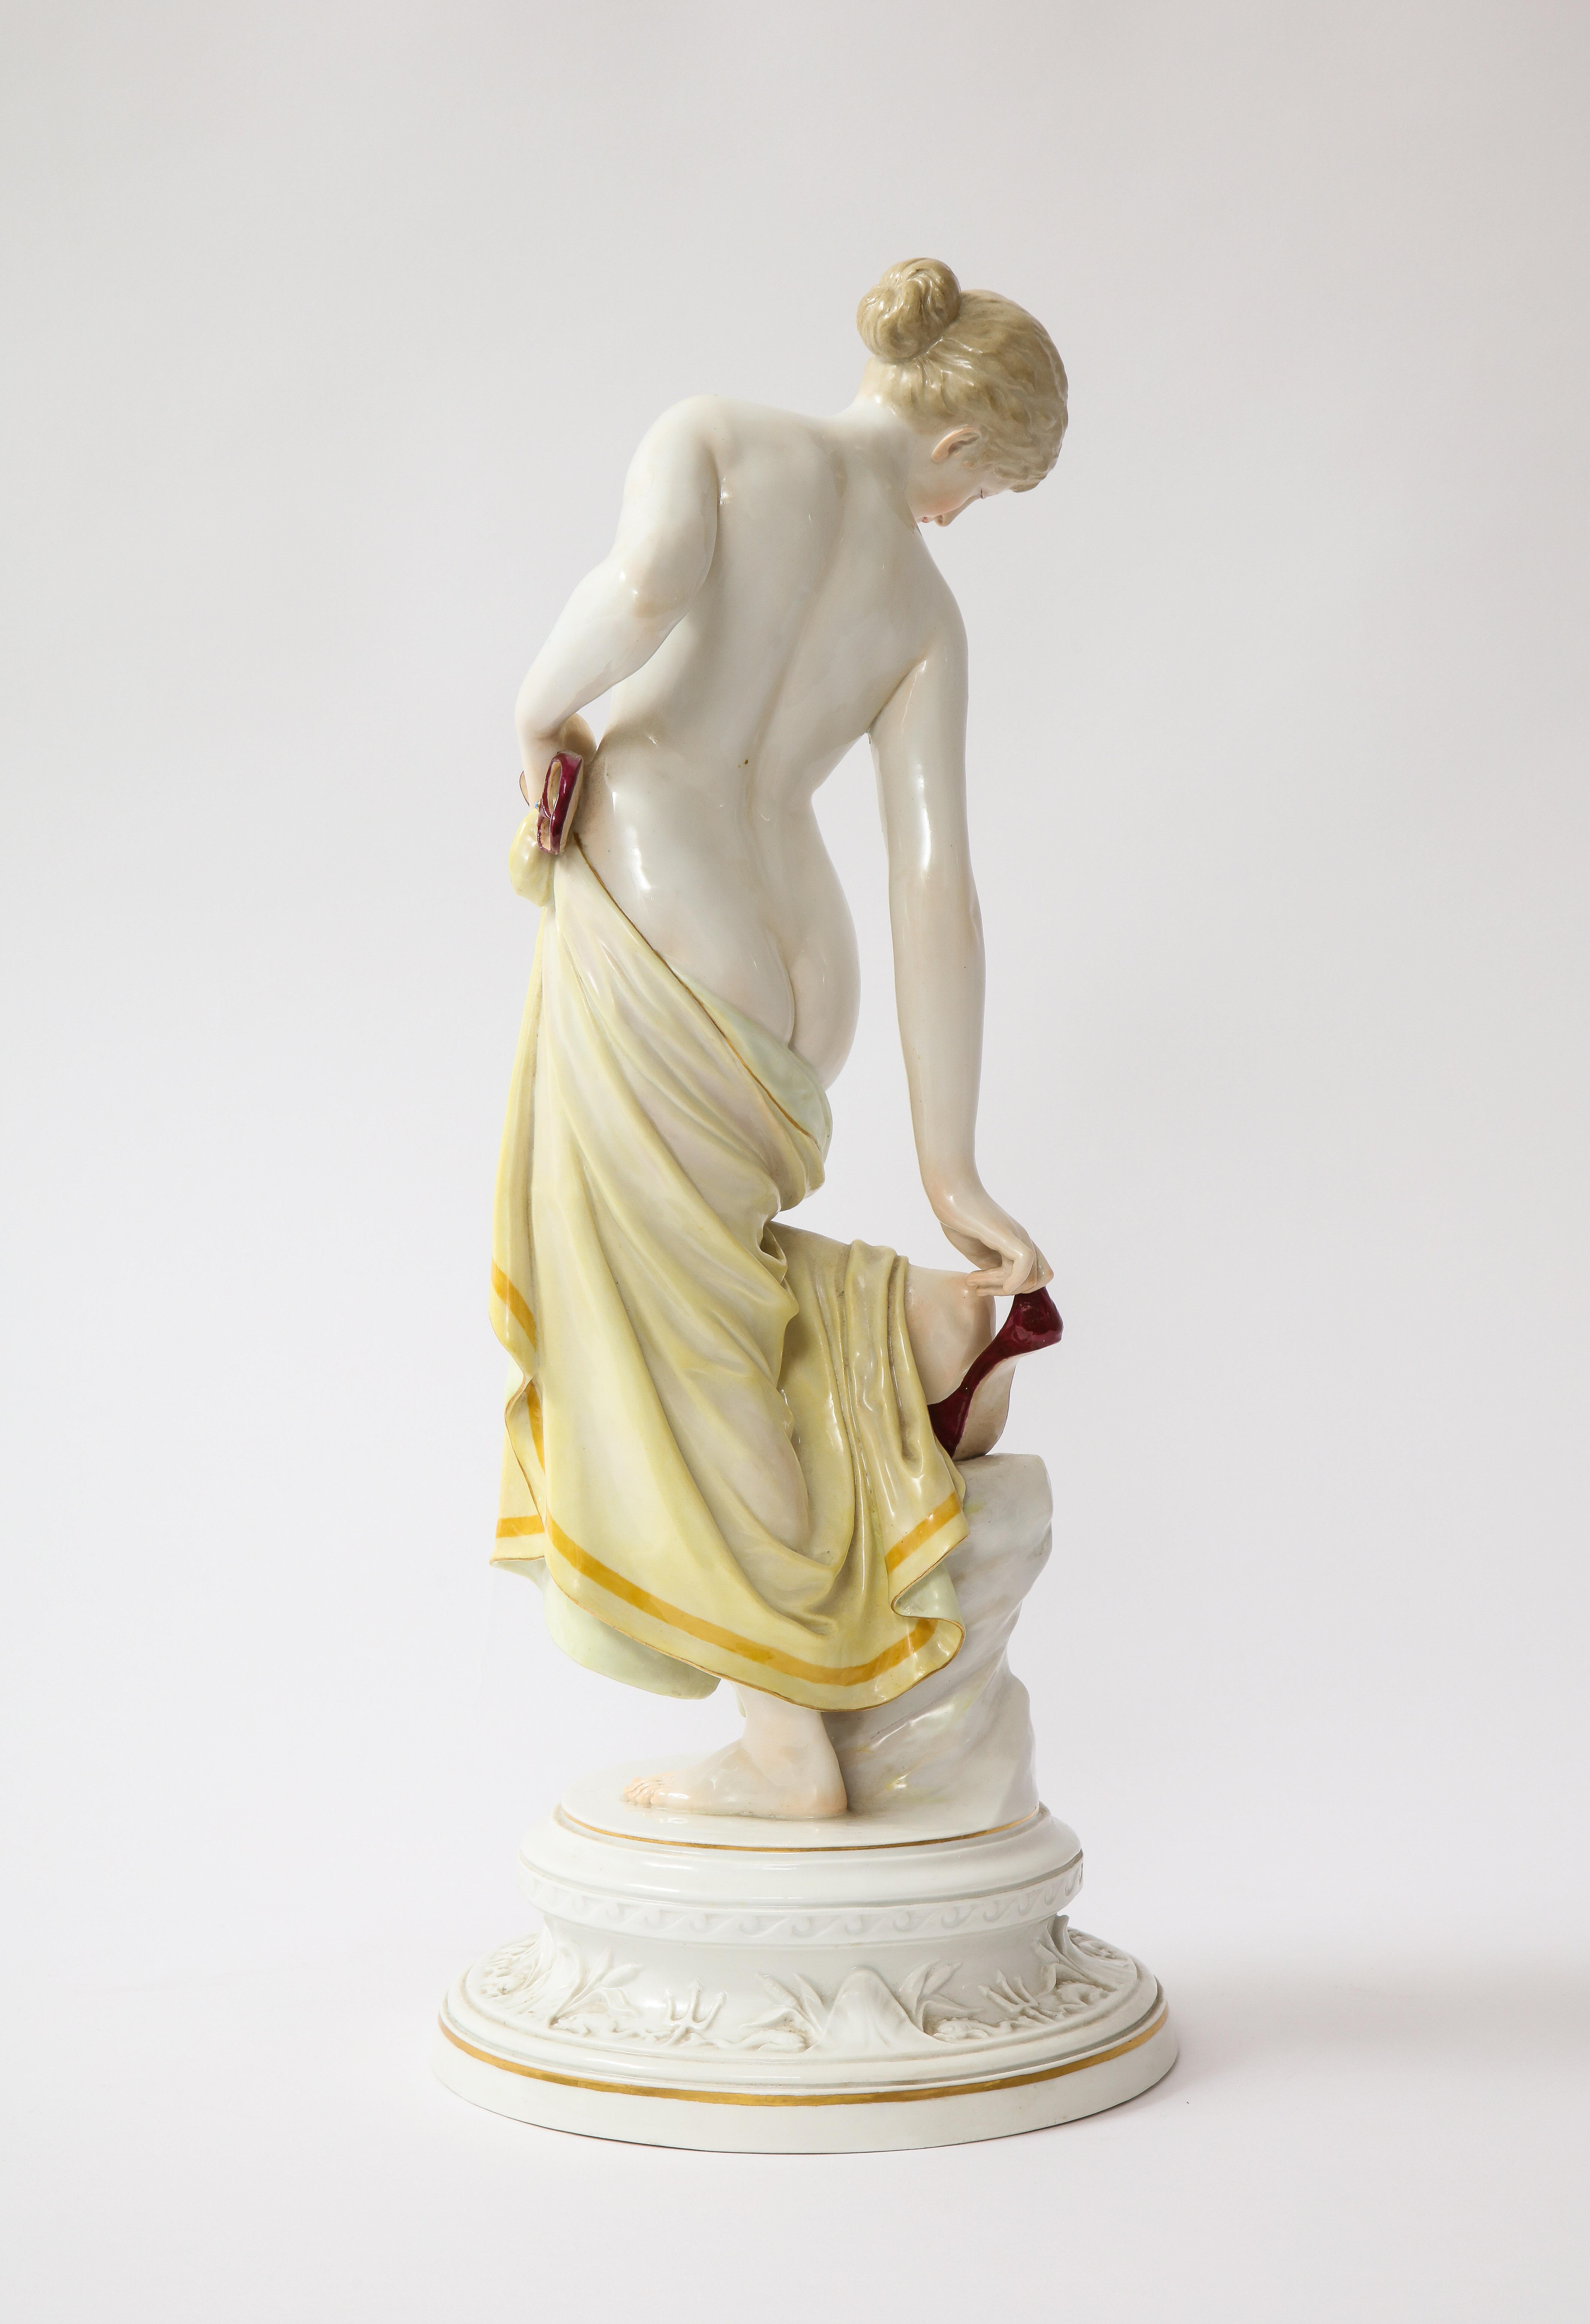 Hand-Painted A 19th C. Meissen Porcelain Female Nude Figurine After The Bath, R. Ockelmann For Sale